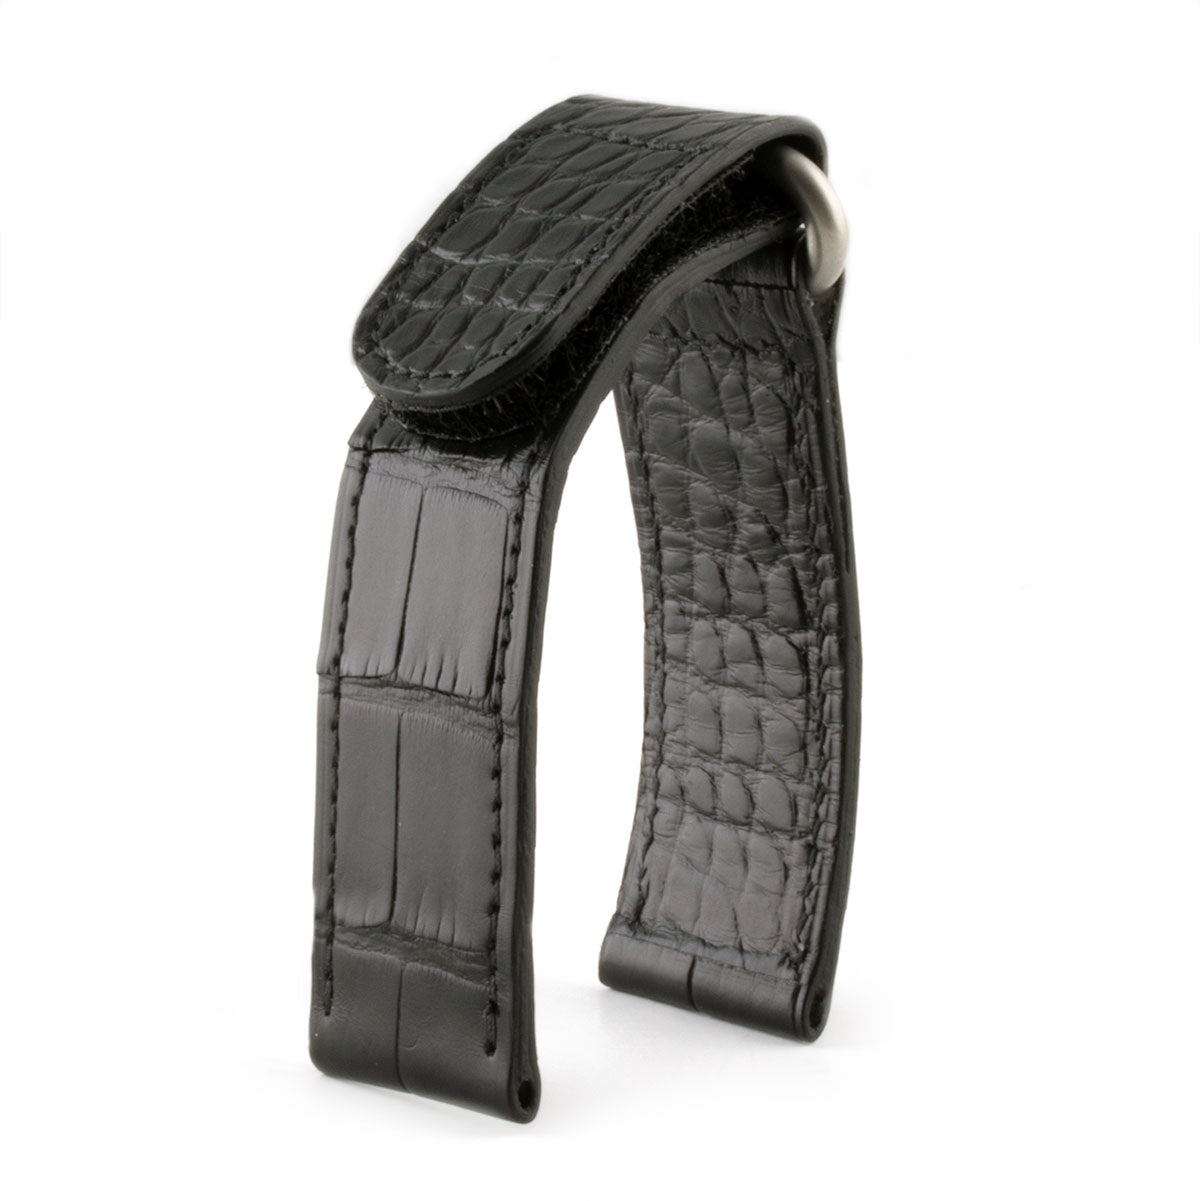 Velcro leather watch band - Alligator